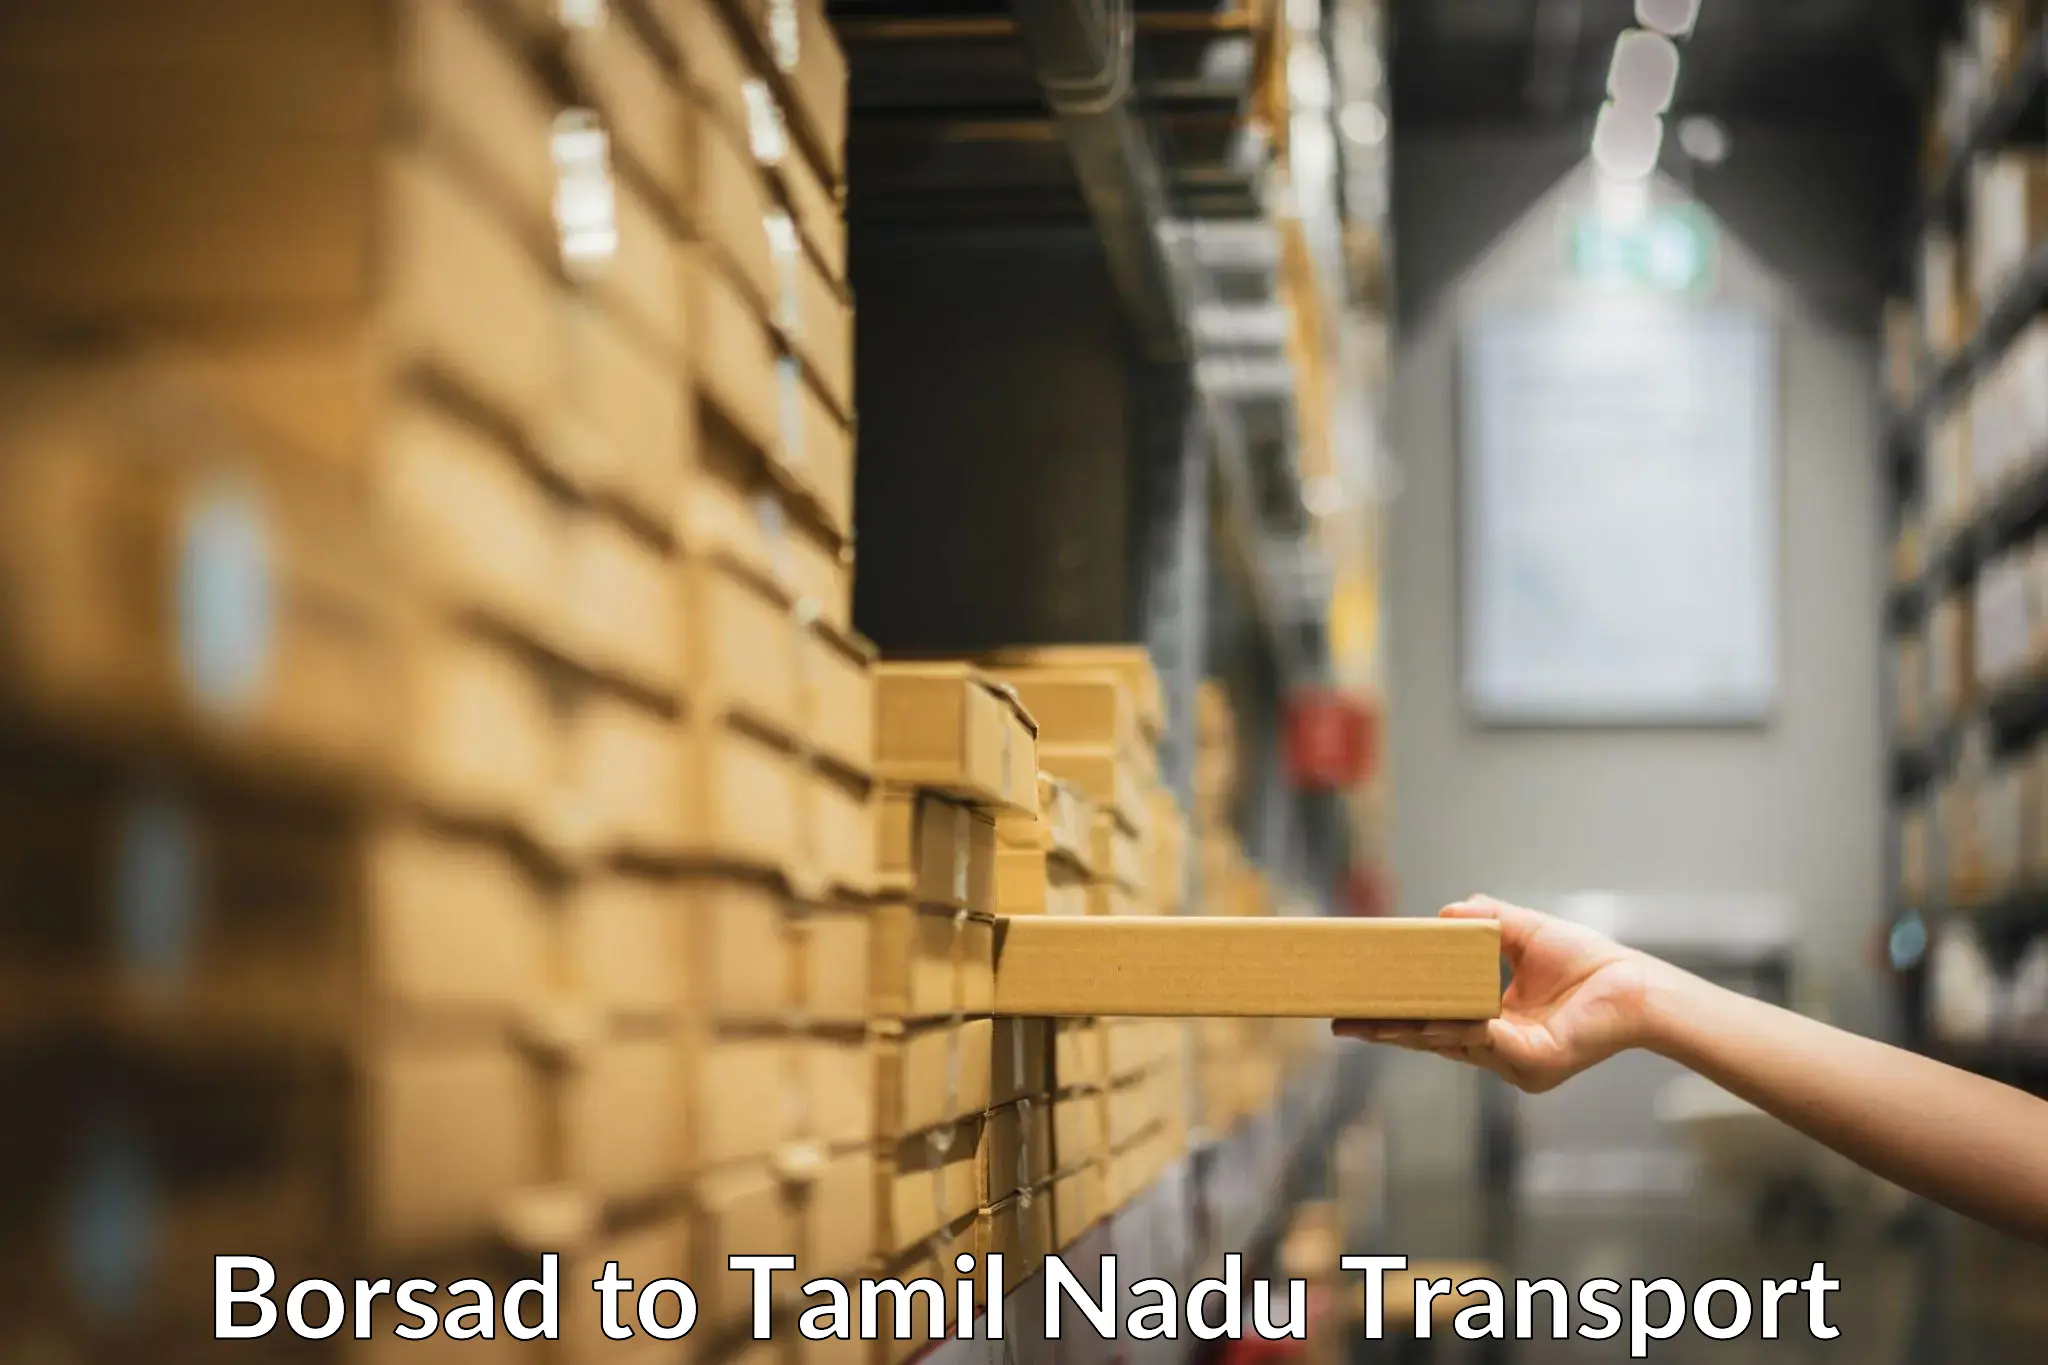 Furniture transport service Borsad to Madurai